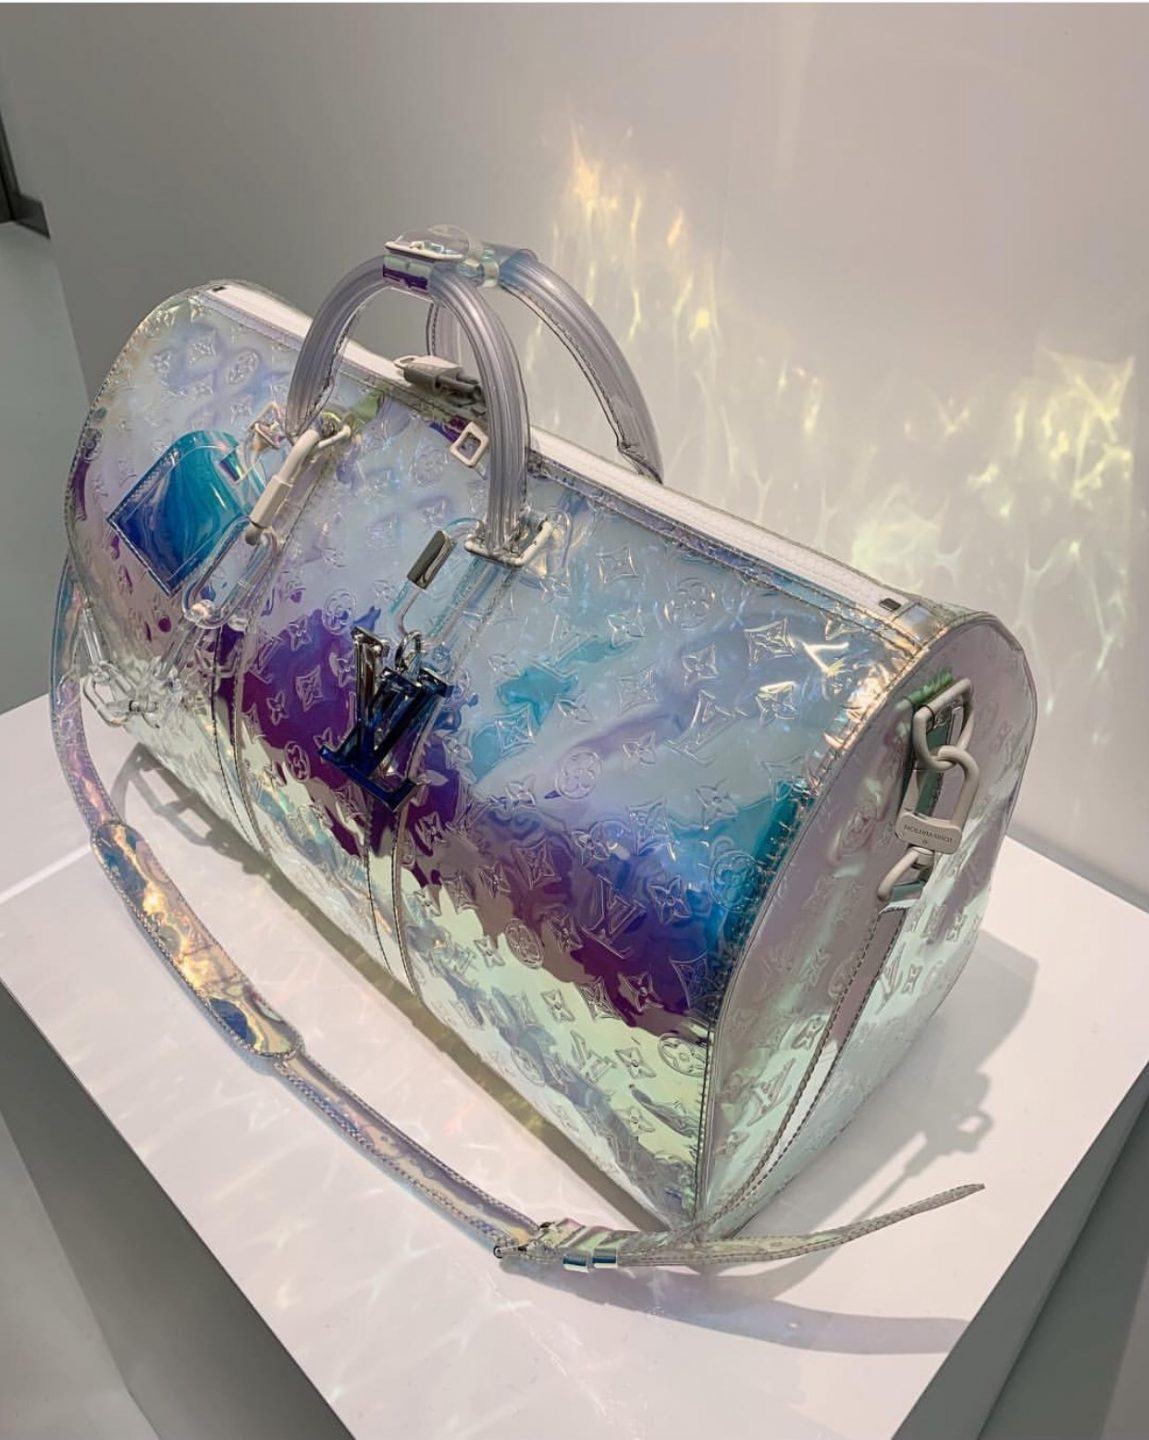 Bags, Louis Vuitton Le Keepall Prism